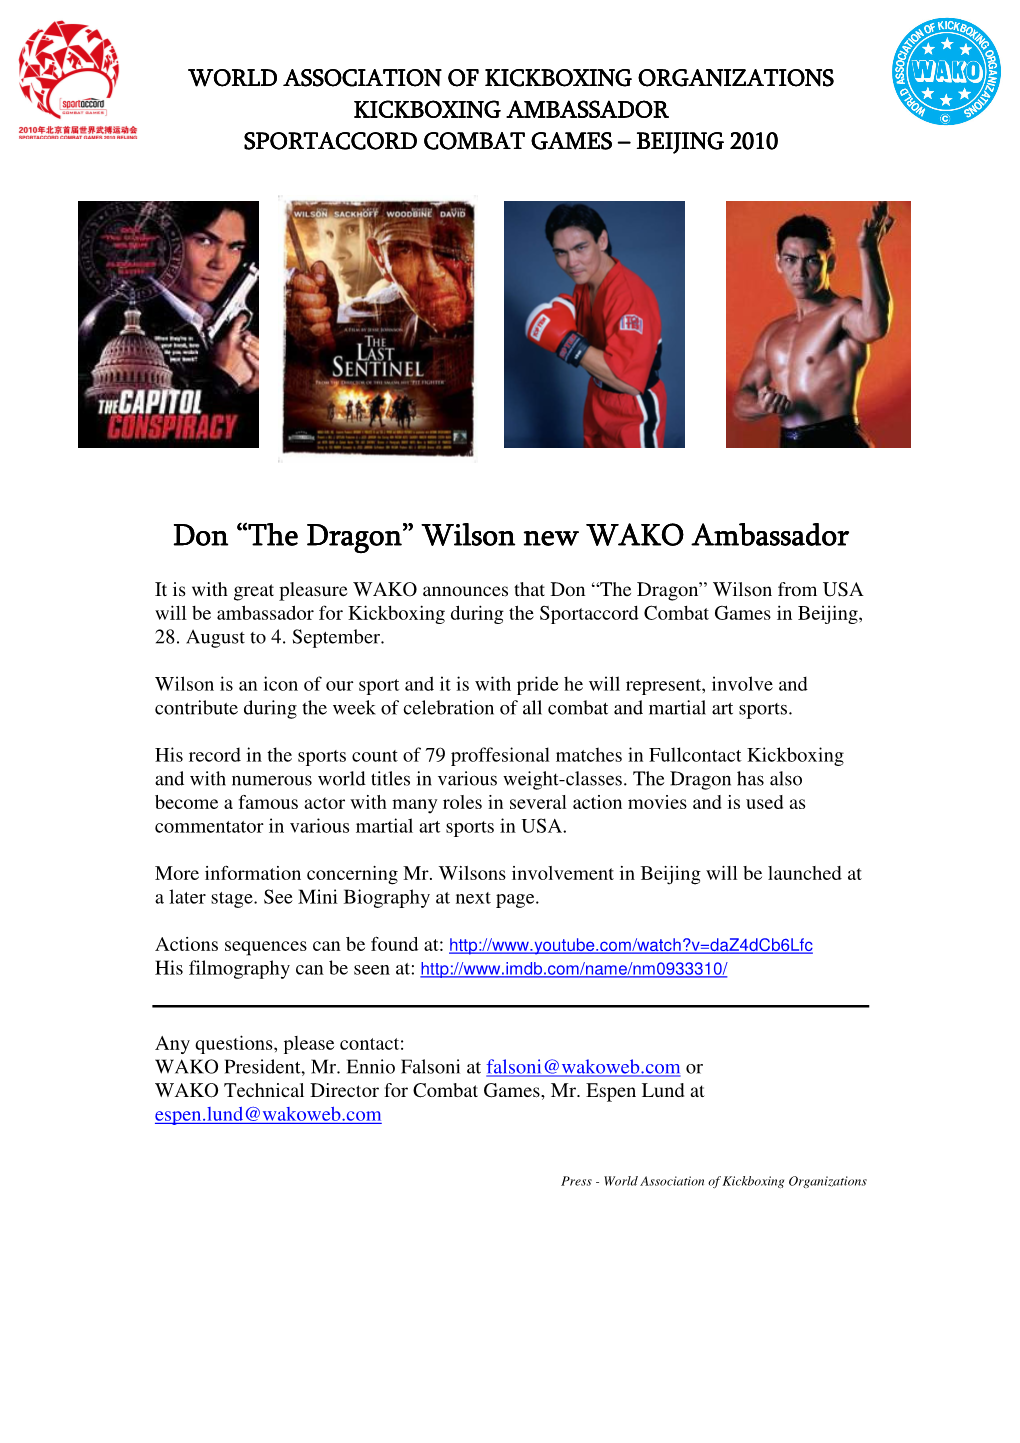 Don “The Dragon” Wilson New WAKO Ambassador Don “The Dragon